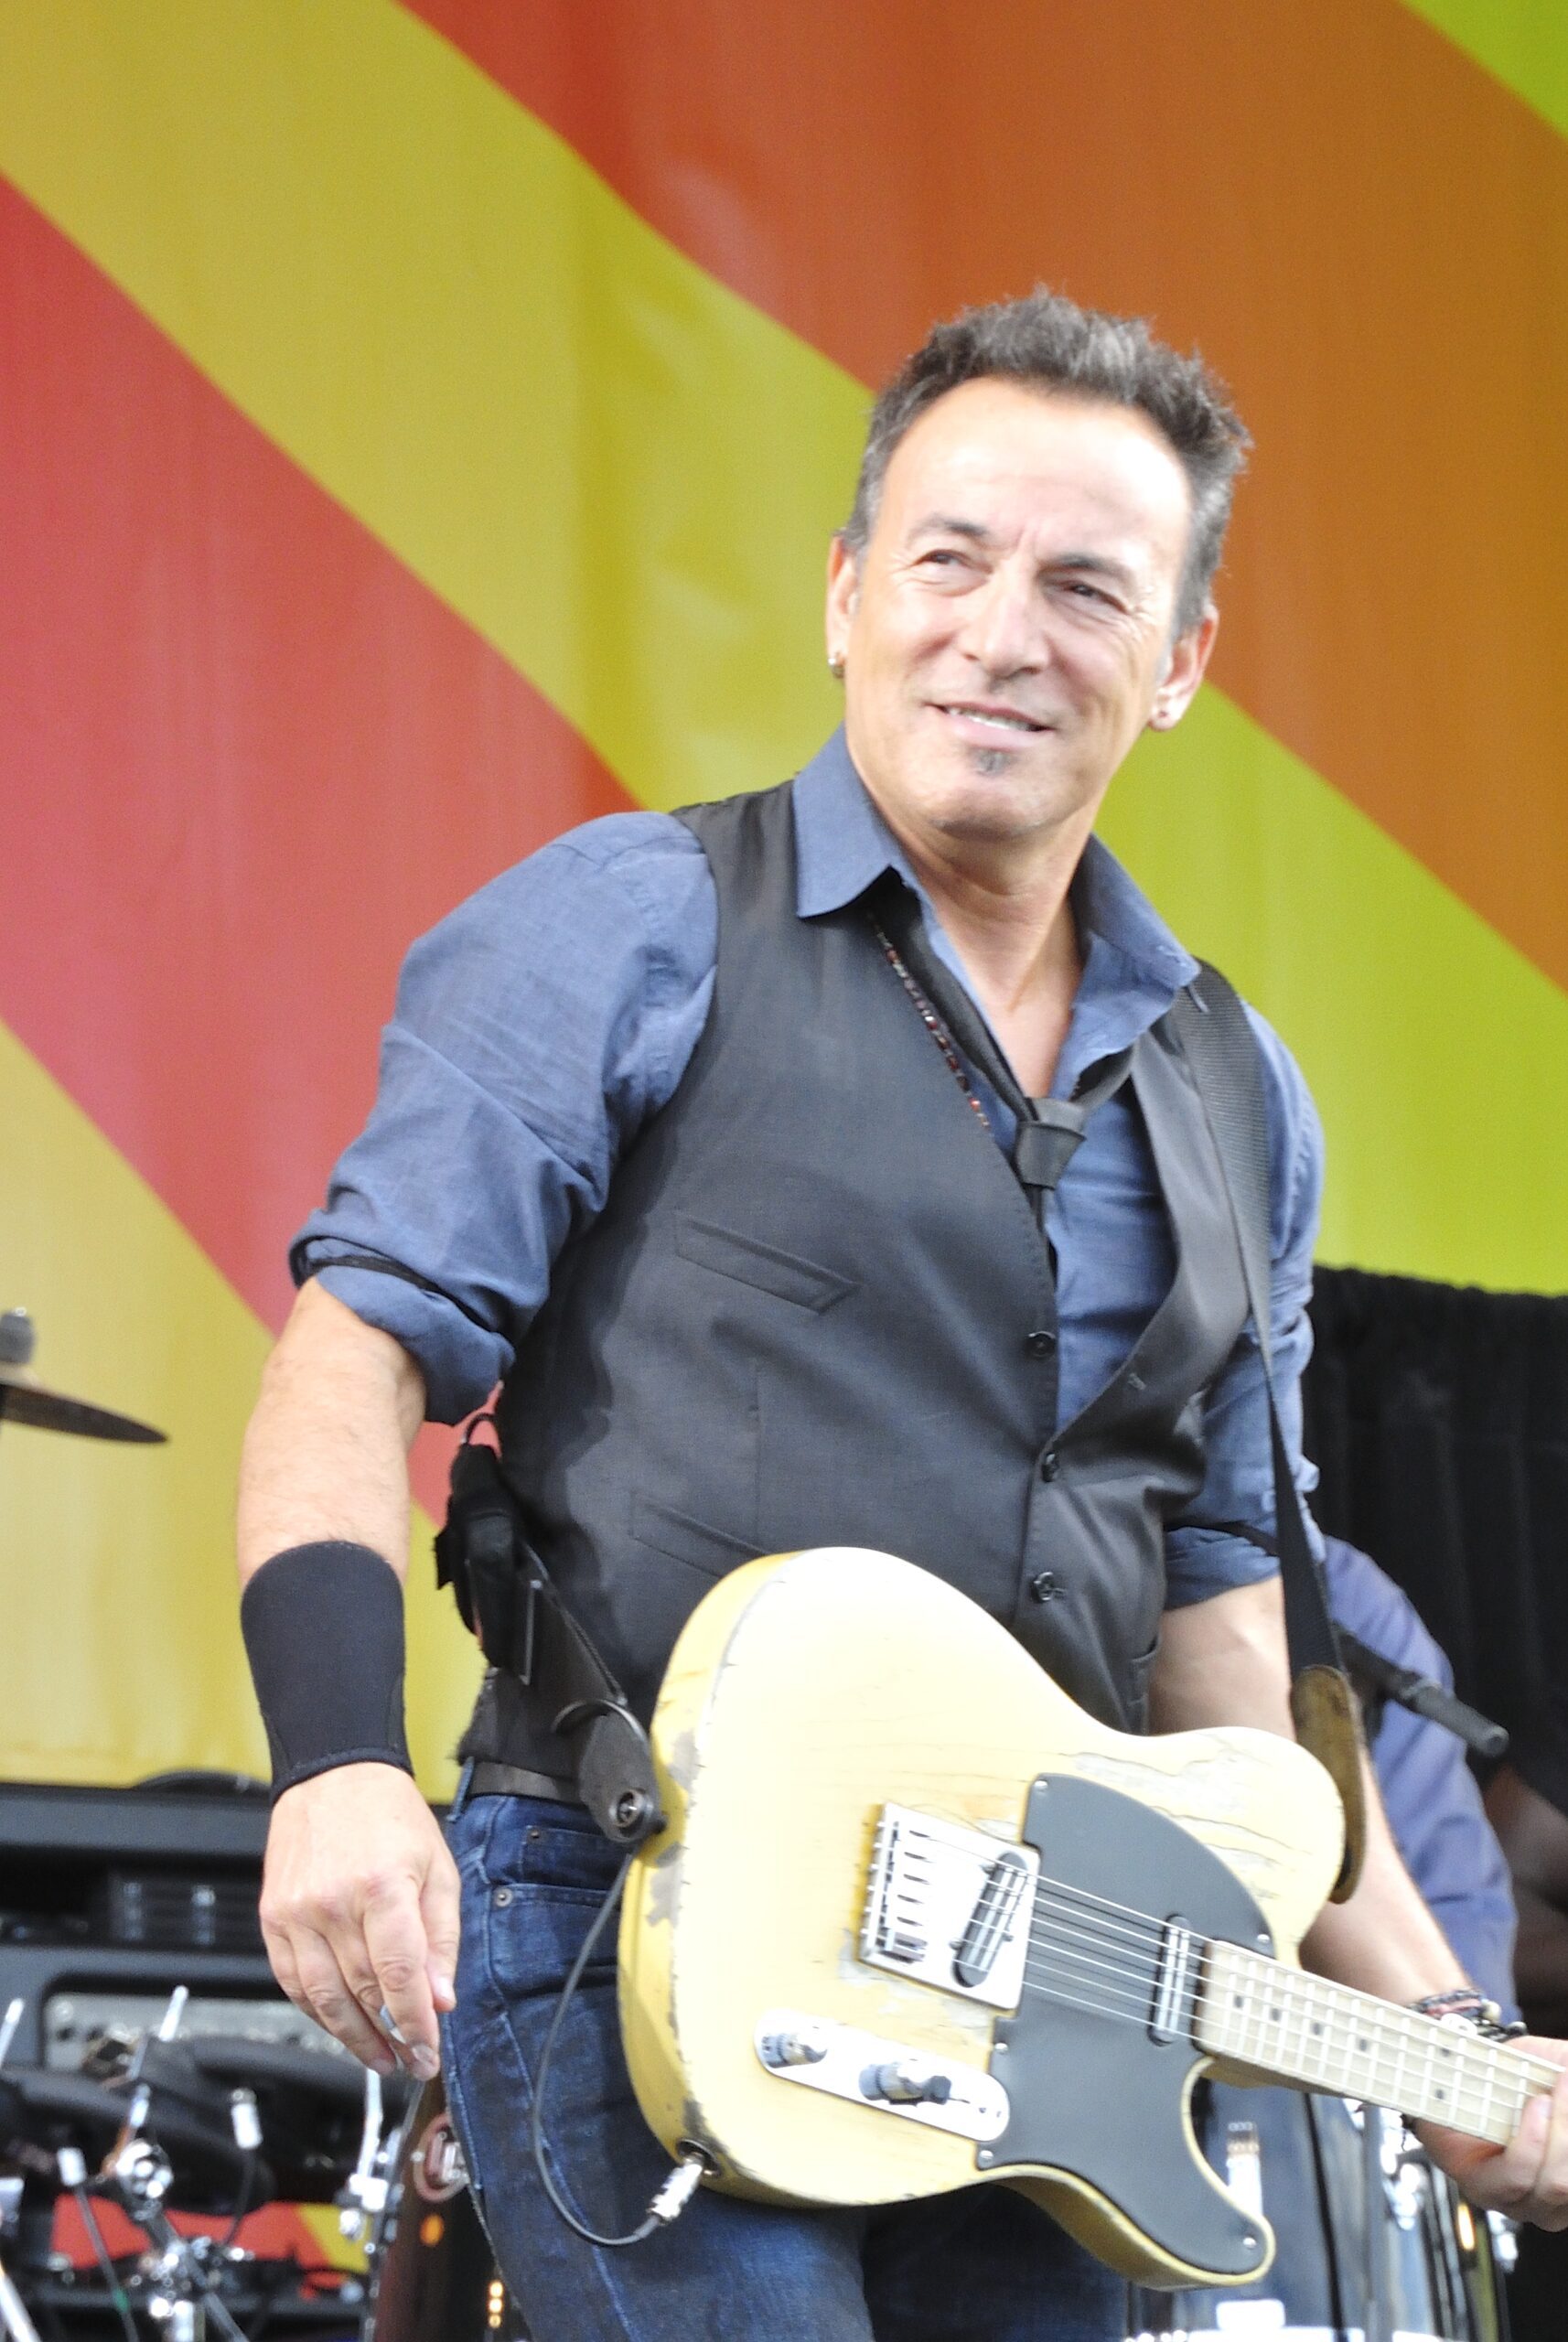 Bruce Springsteen setlist rgatefeed.com